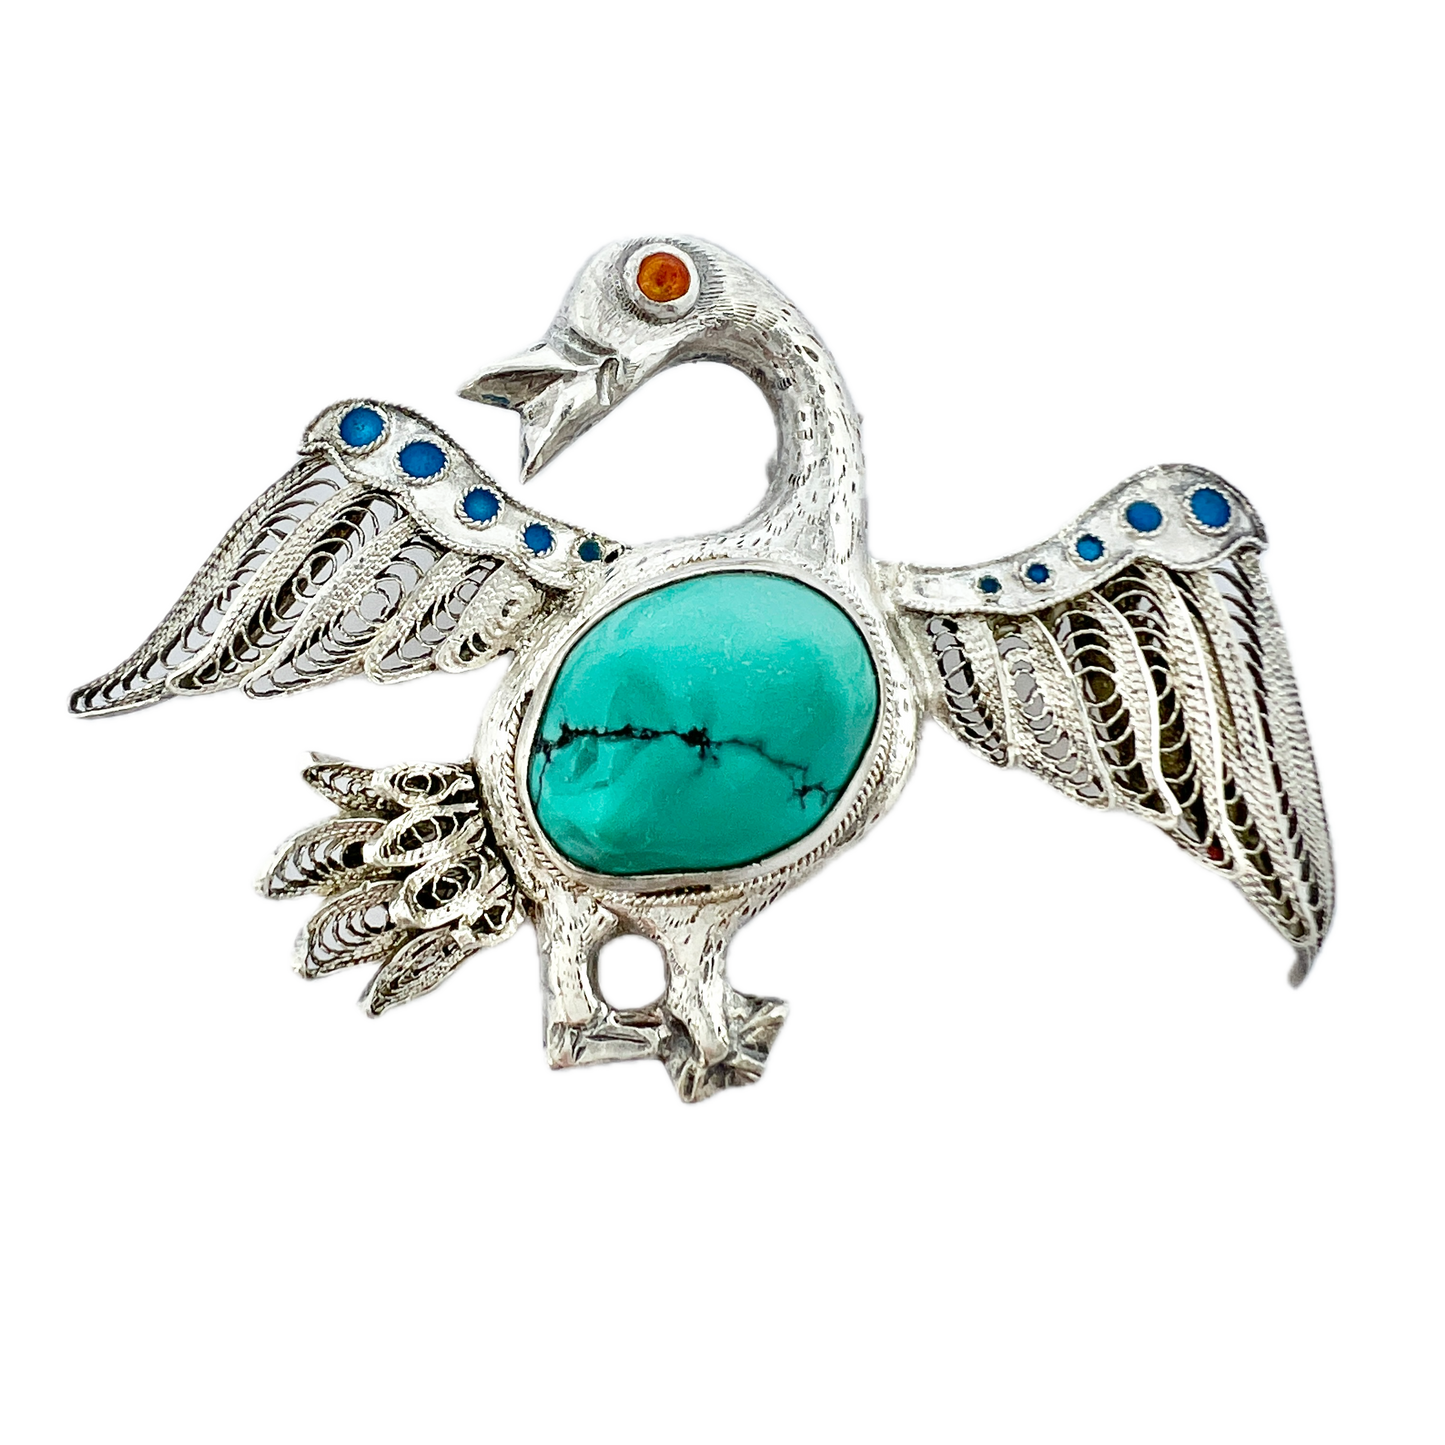 China. Vintage Solid Silver Turquoise Enamel Filigree Bird Brooch.